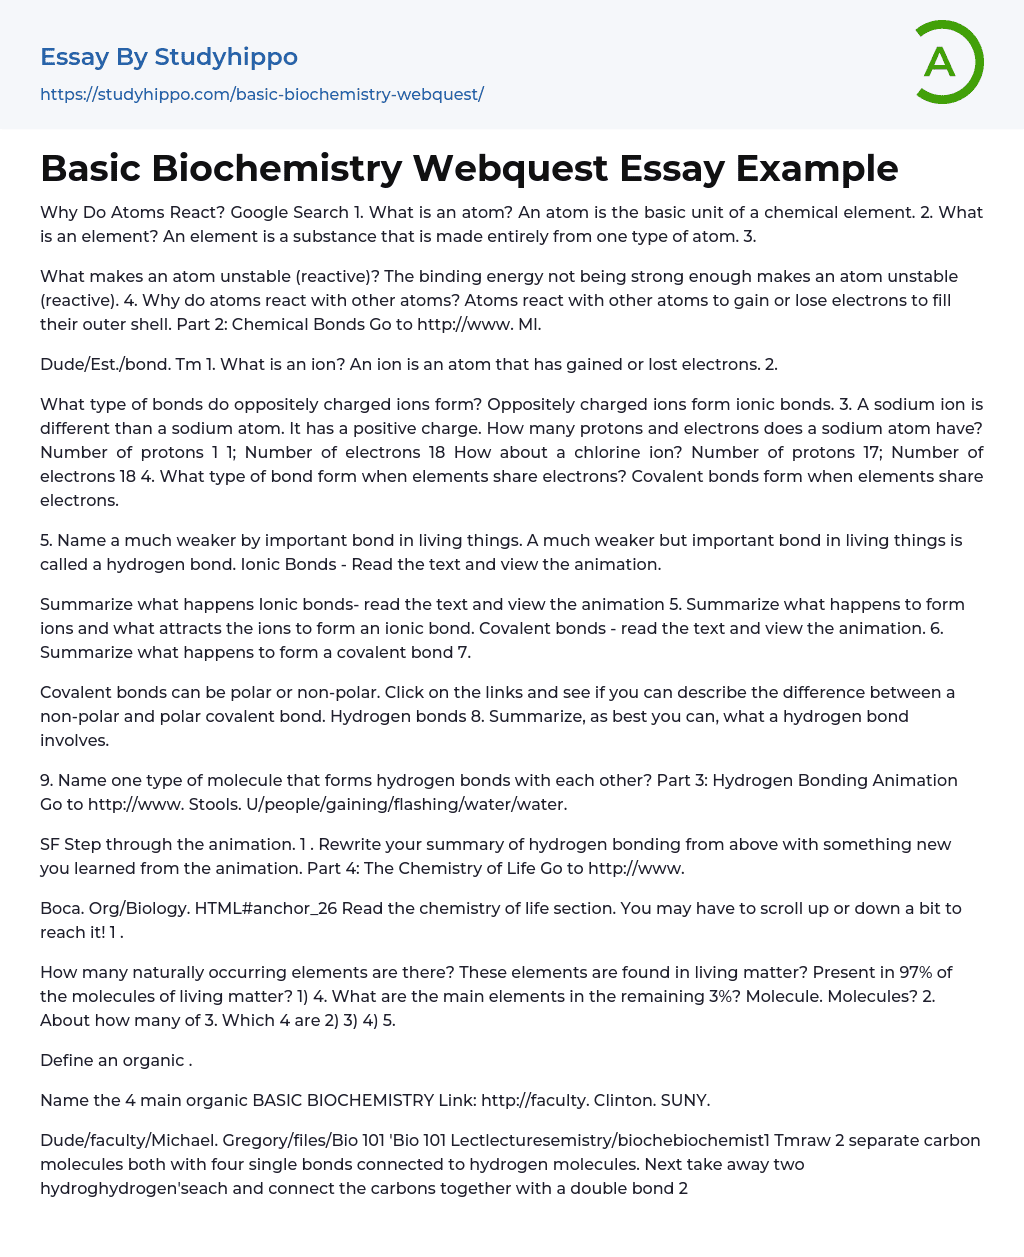 Basic Biochemistry Webquest Essay Example